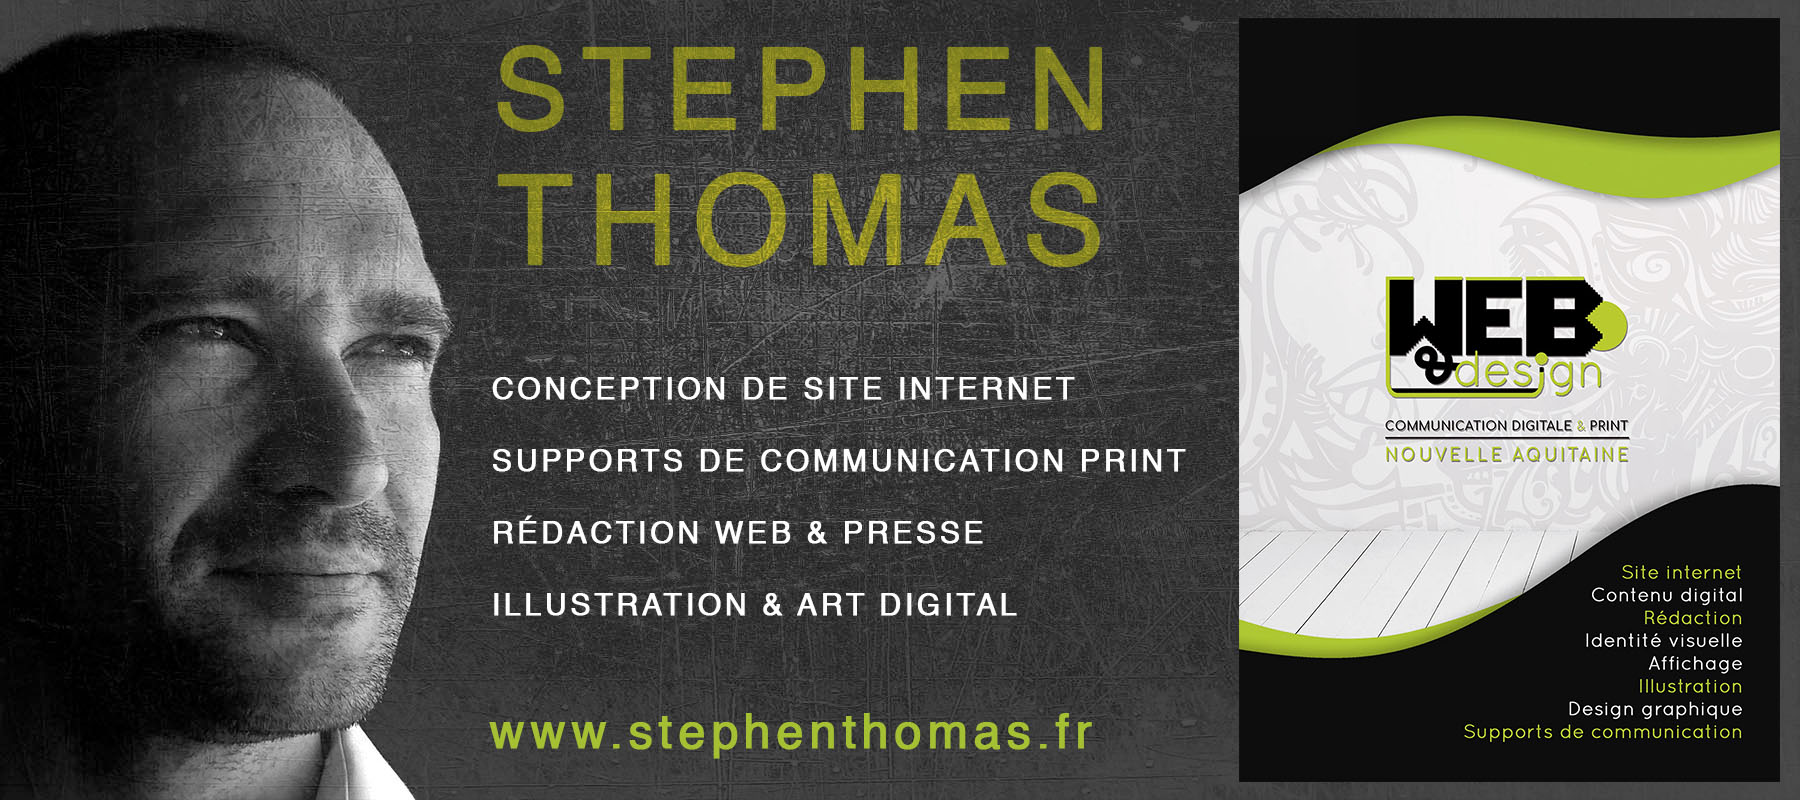 (c) Stephenthomas.fr